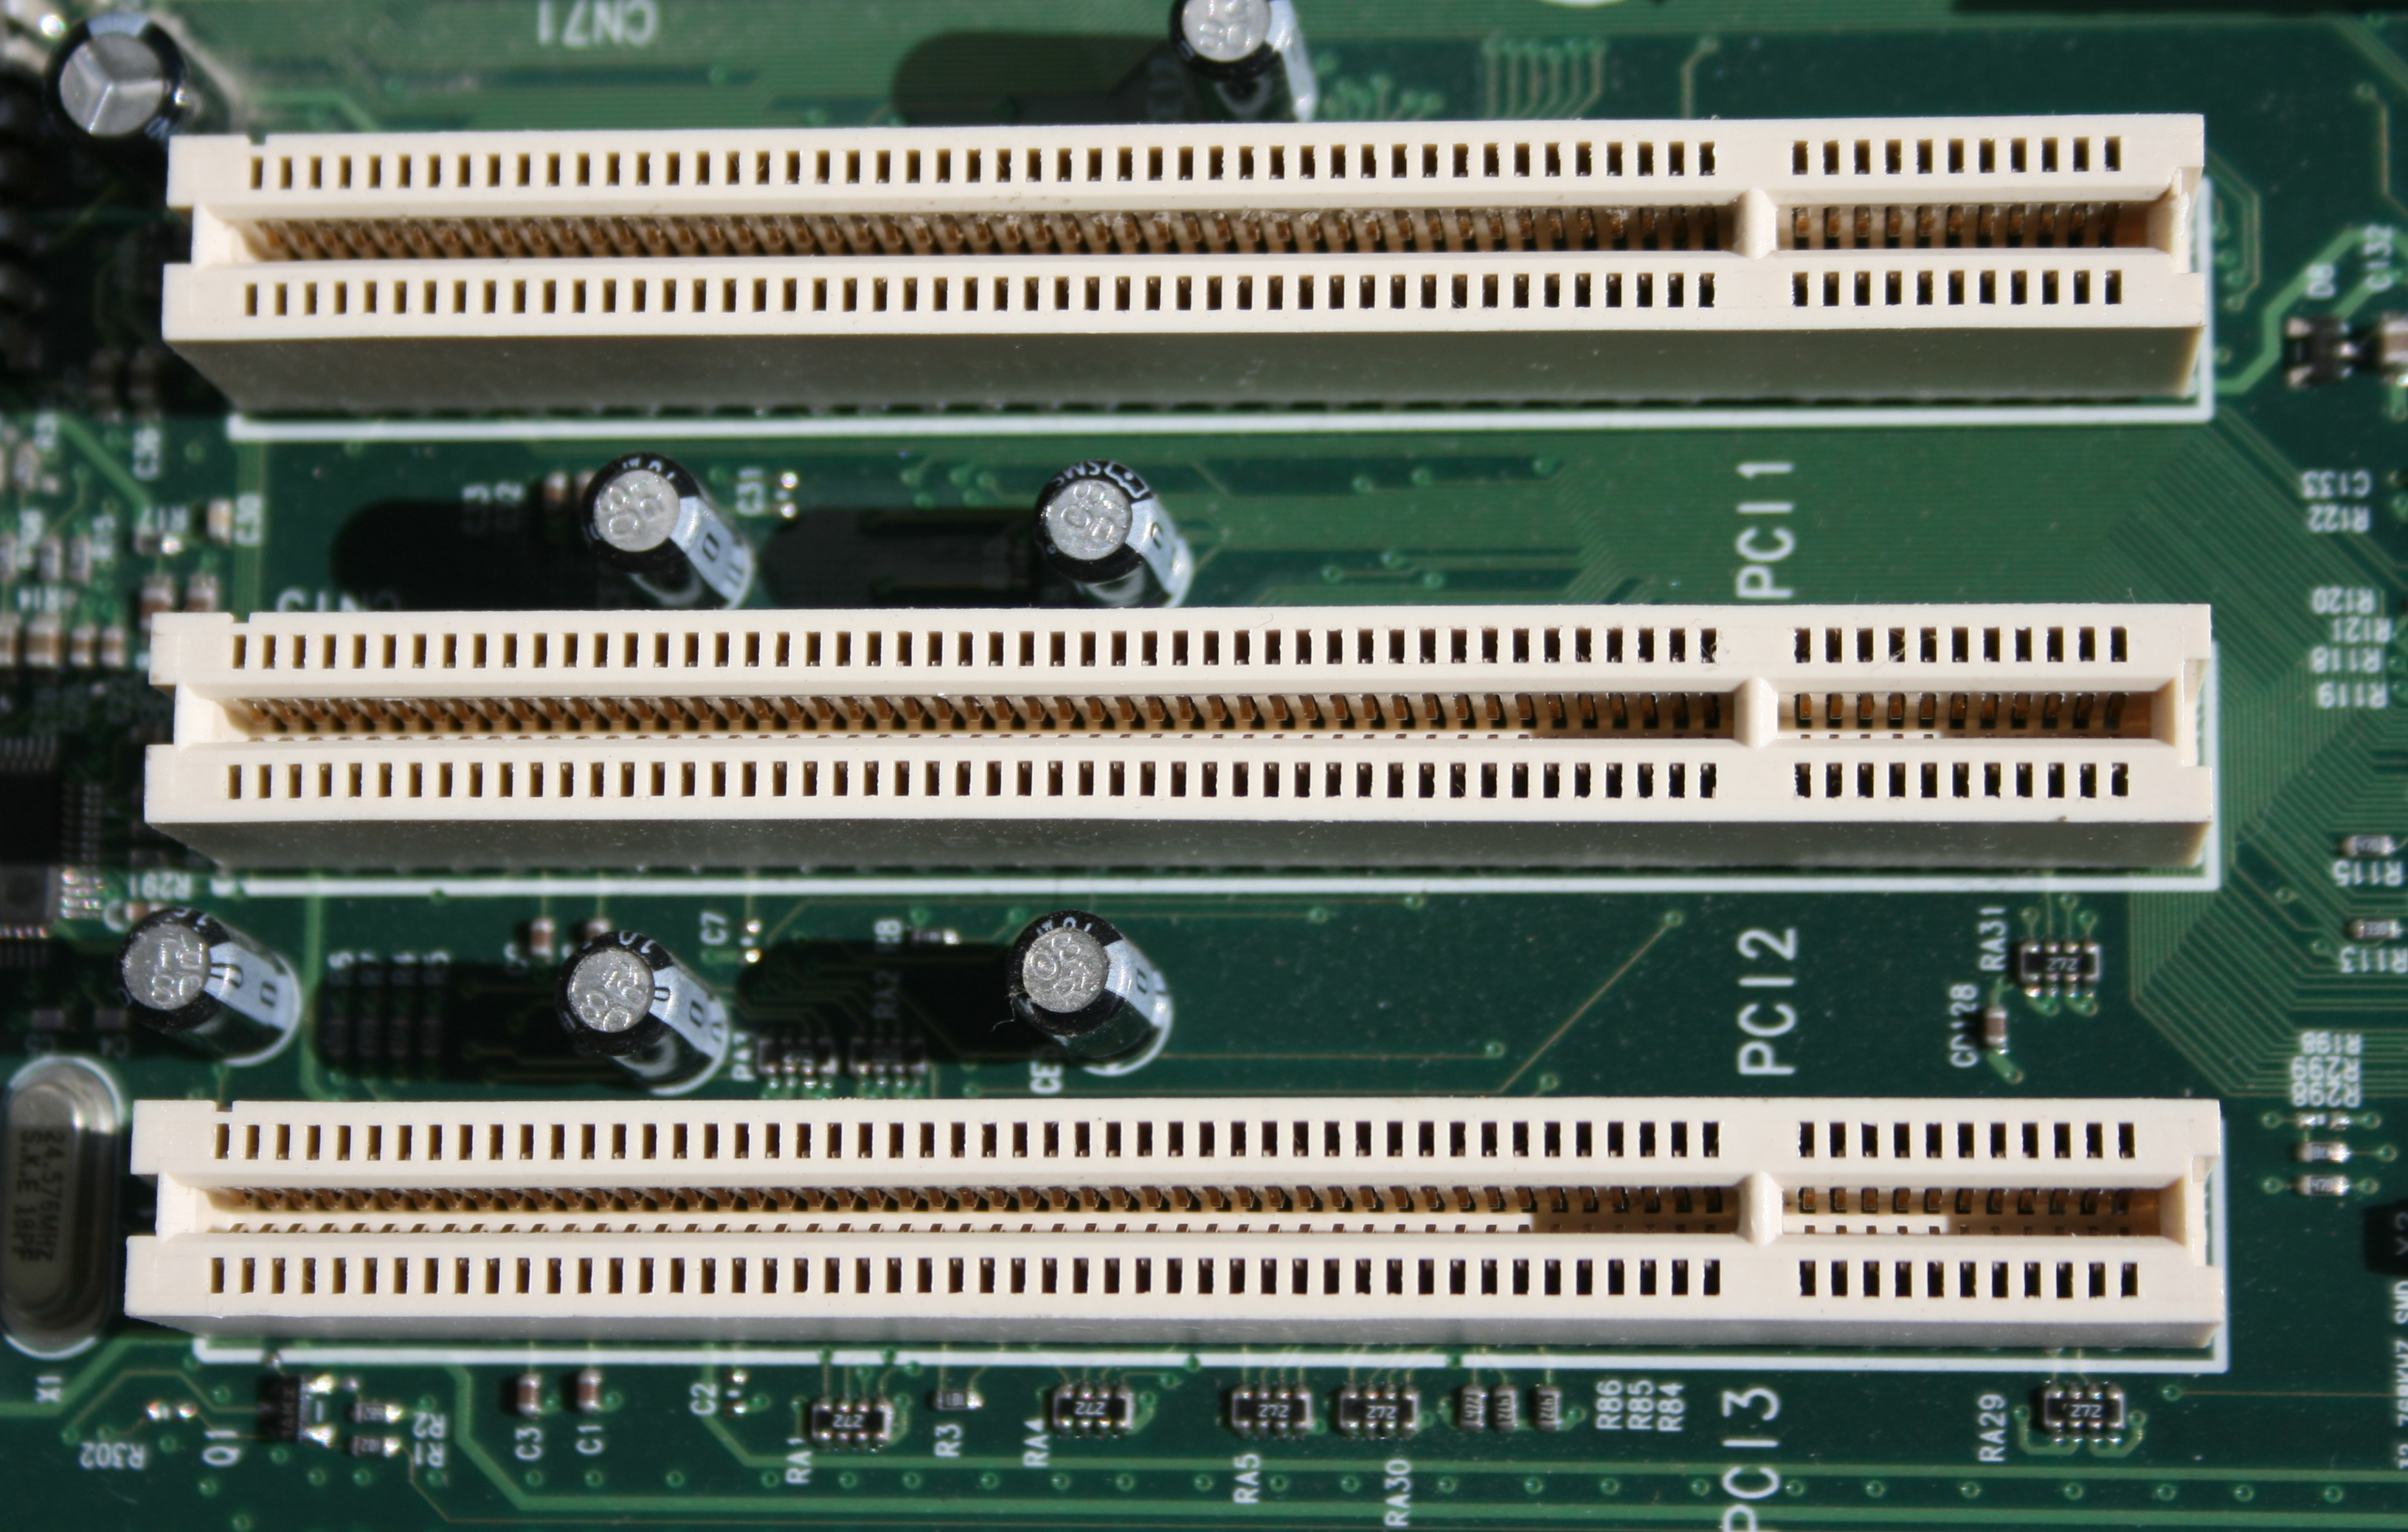 File:PCI Slots Digon3.JPG - Wikipedia